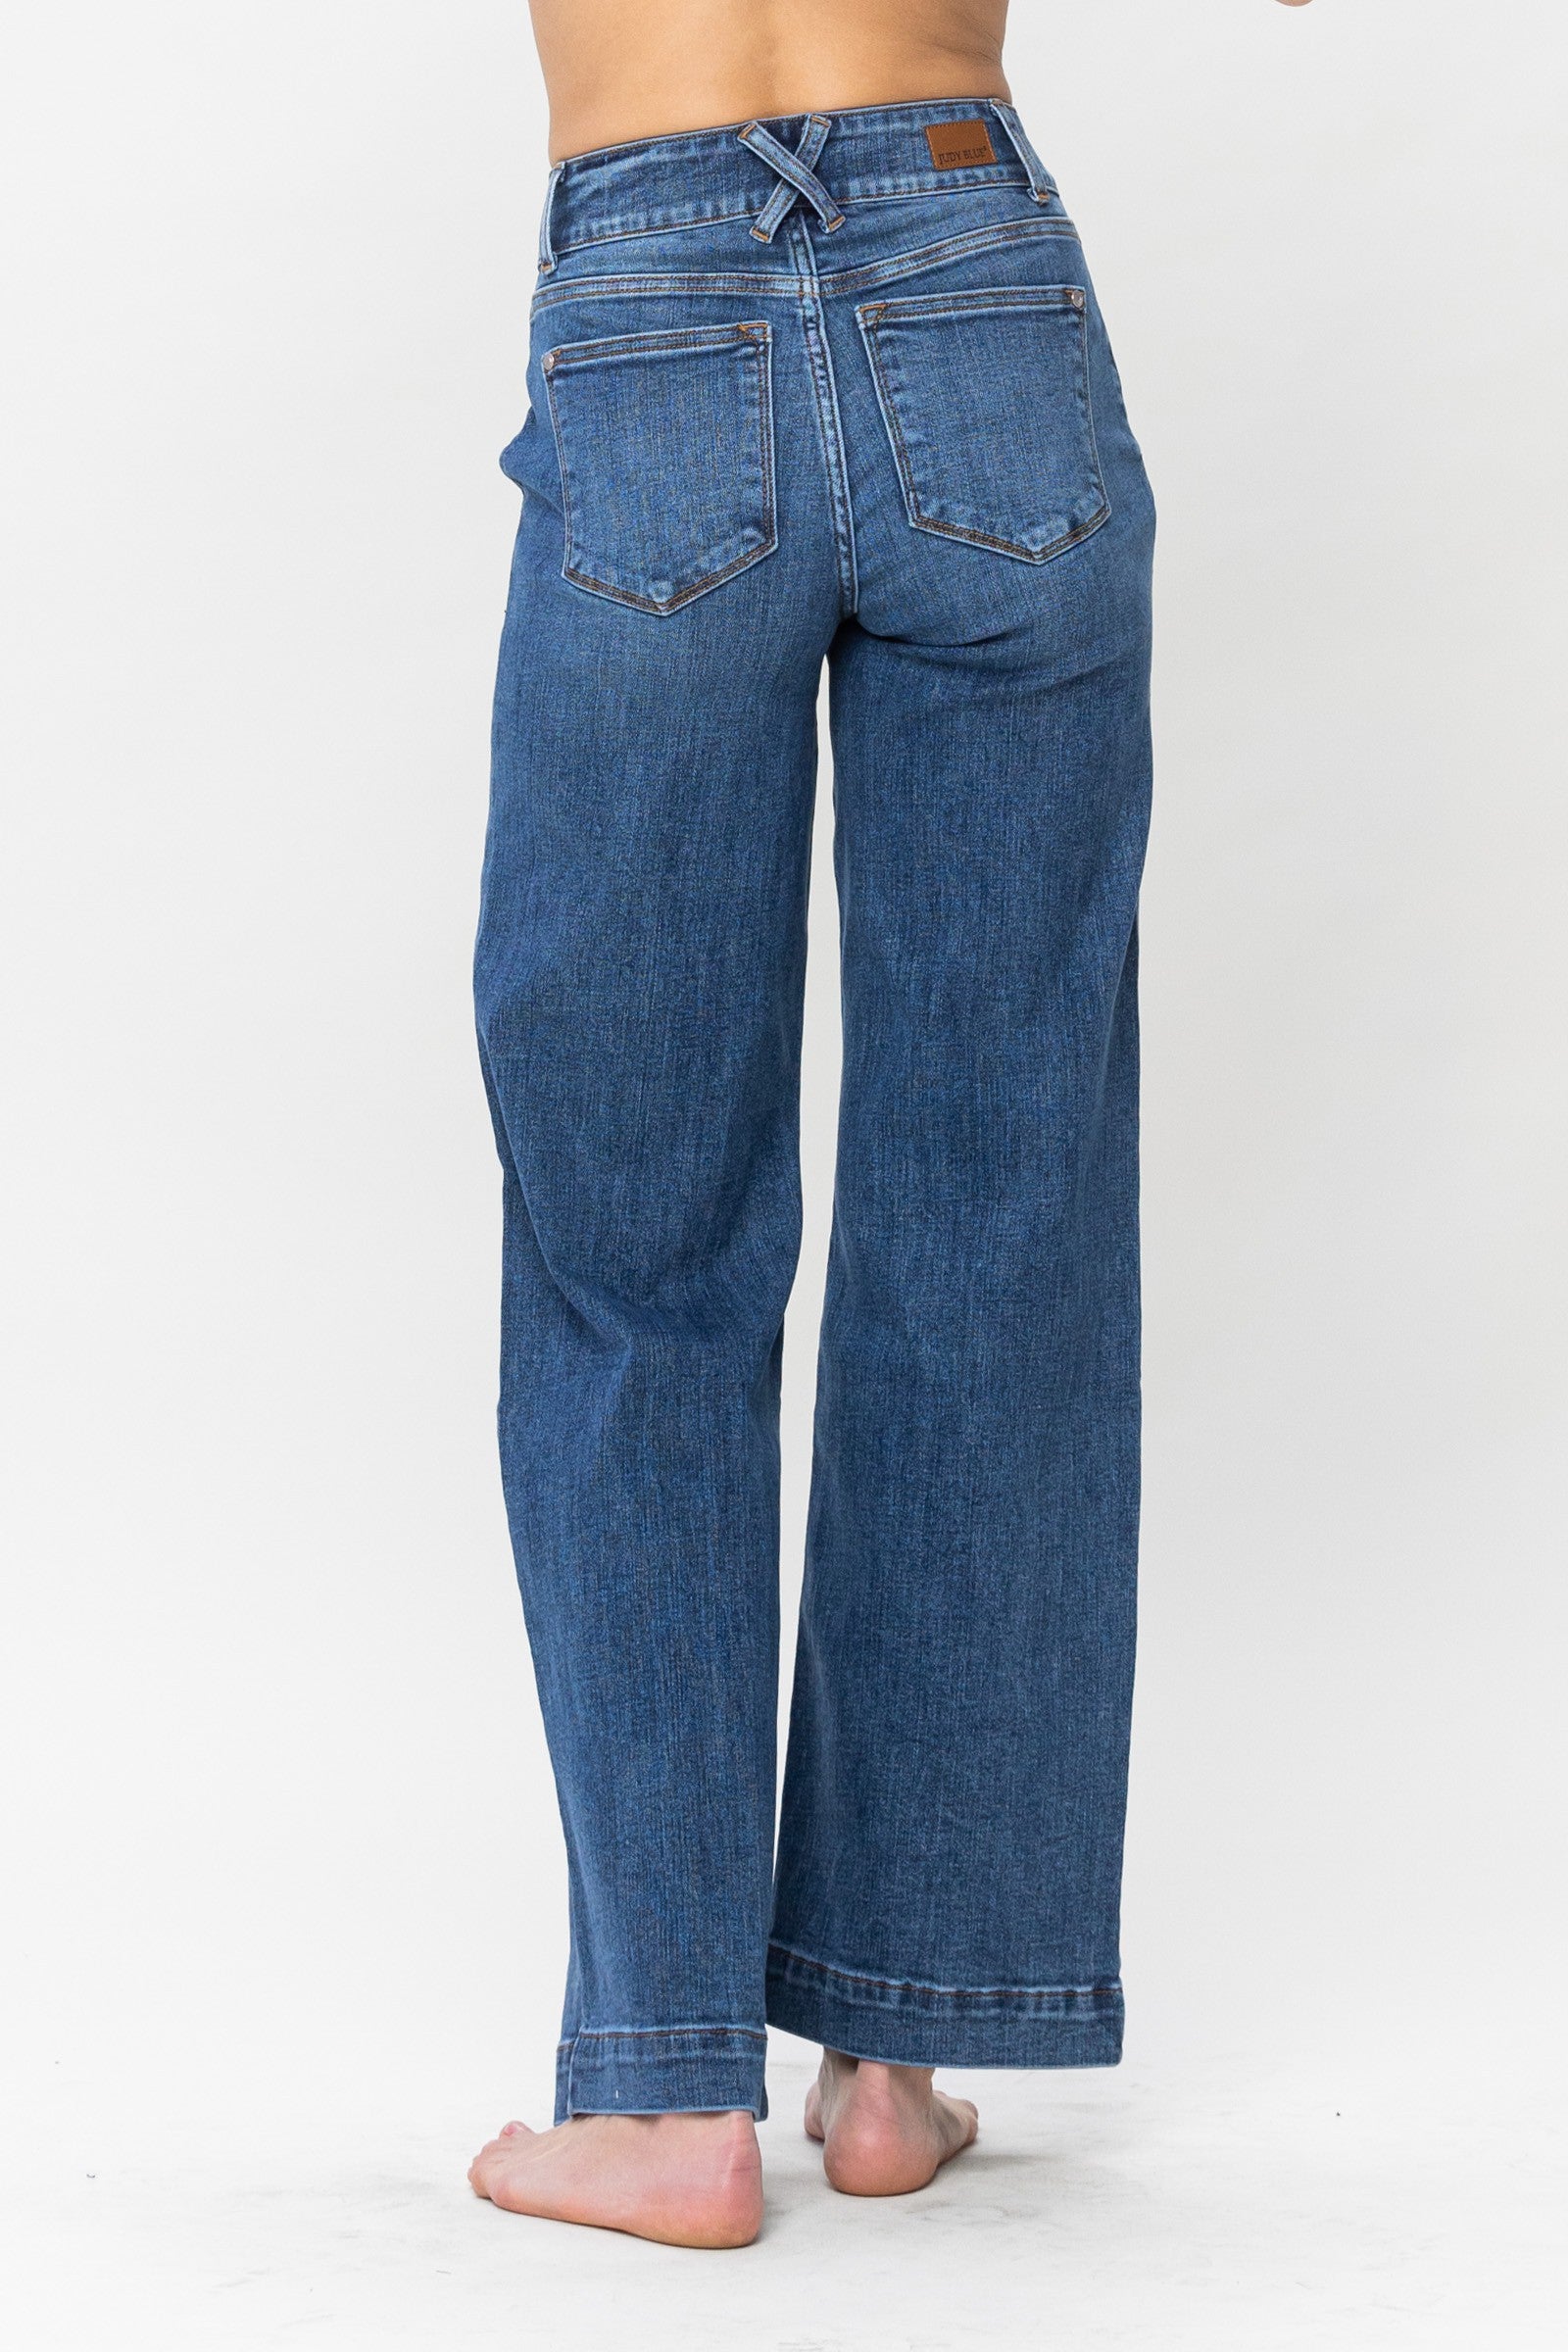 Judy Blue High Waist Double Button Wide Leg Jeans - Brazos Avenue Market 